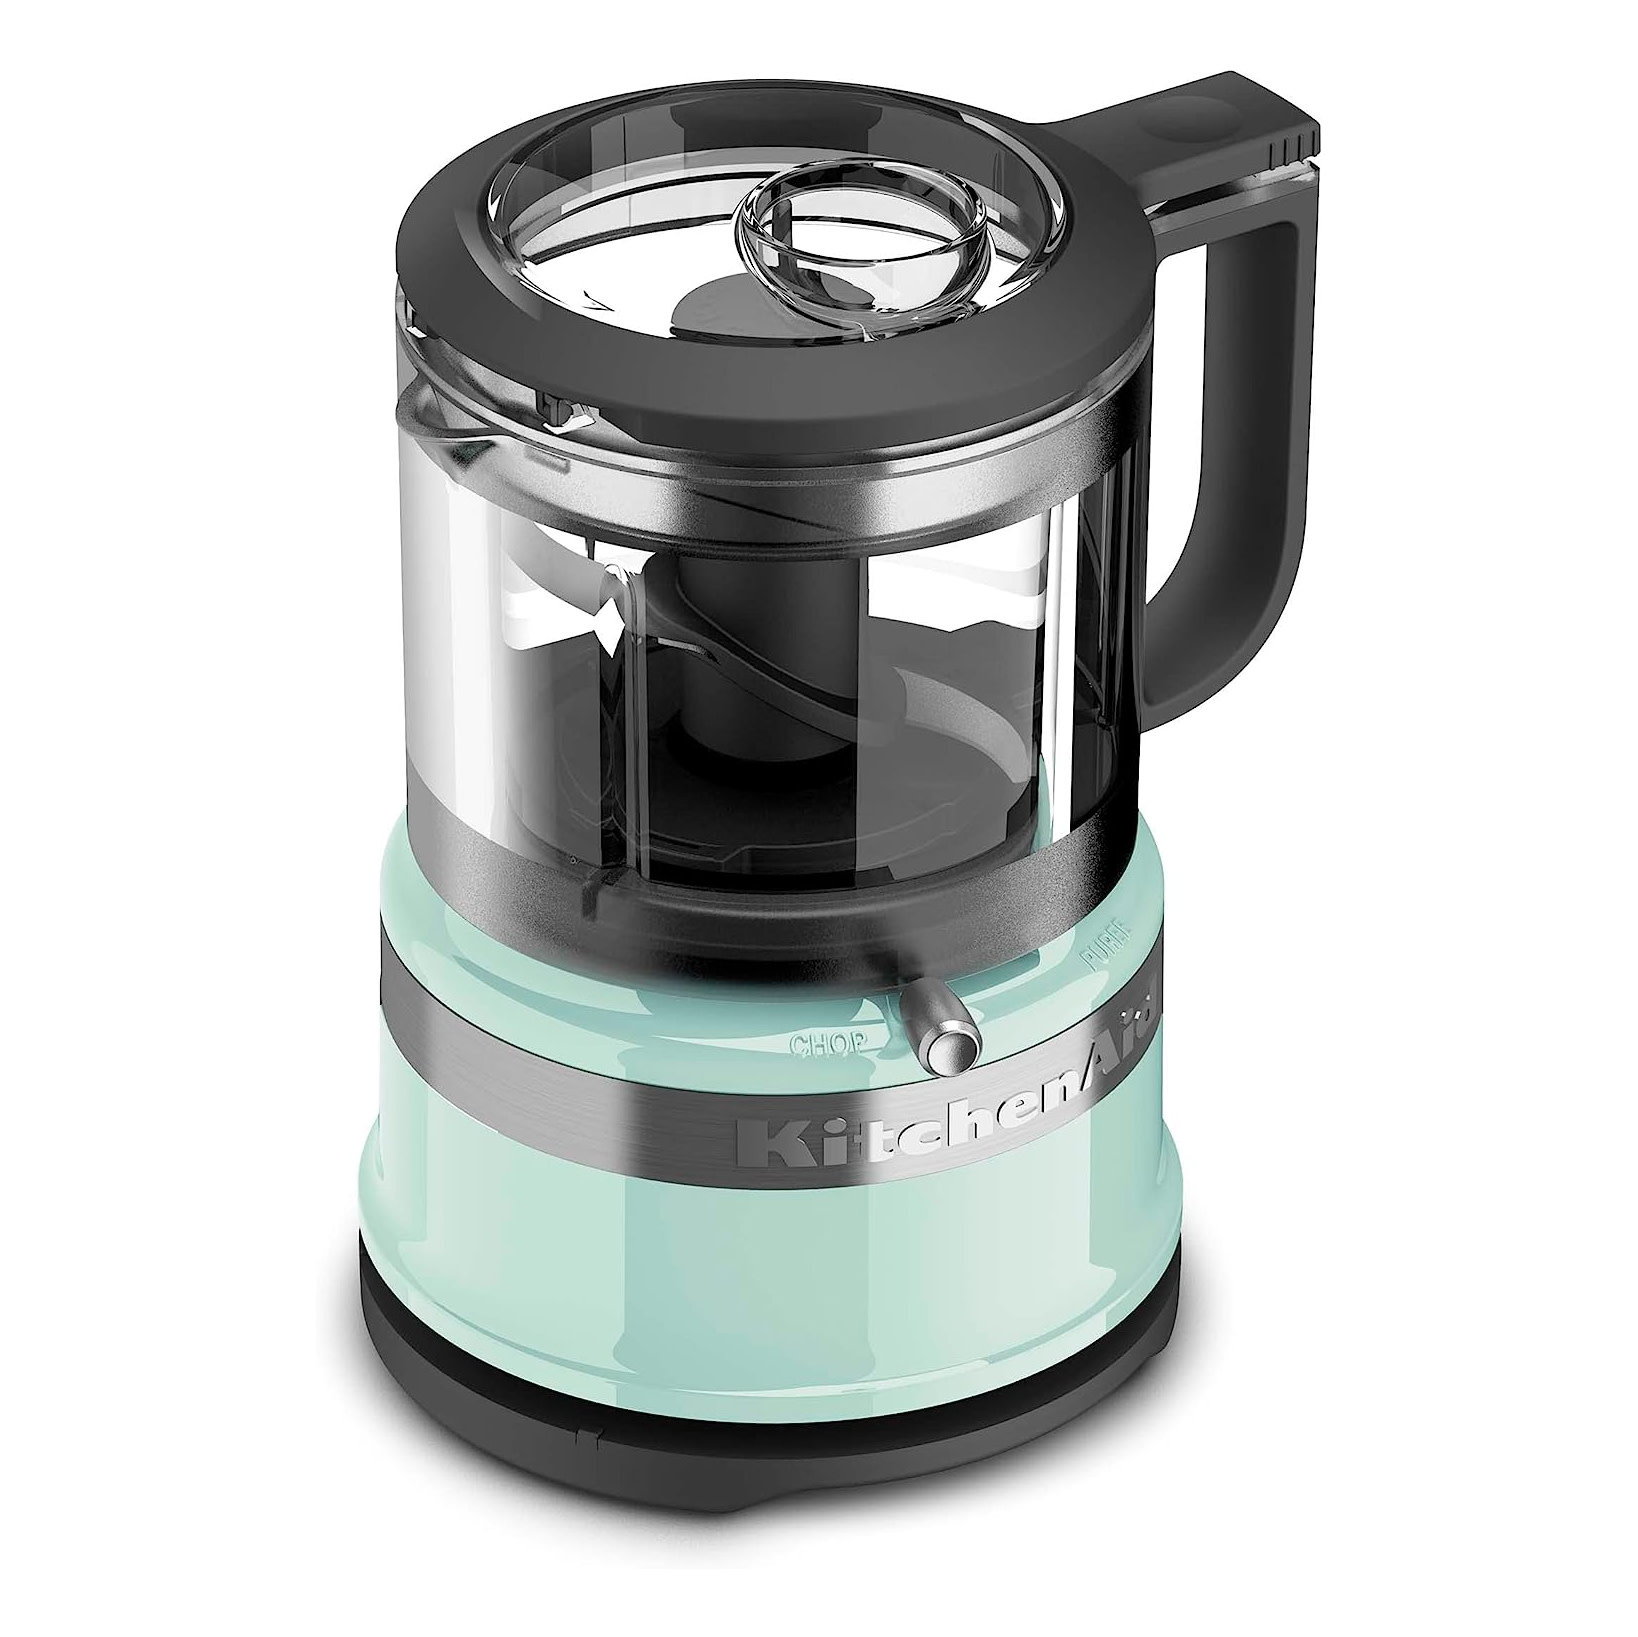 3.5 Cup Mini Food Processor - Aqua Sky, KitchenAid